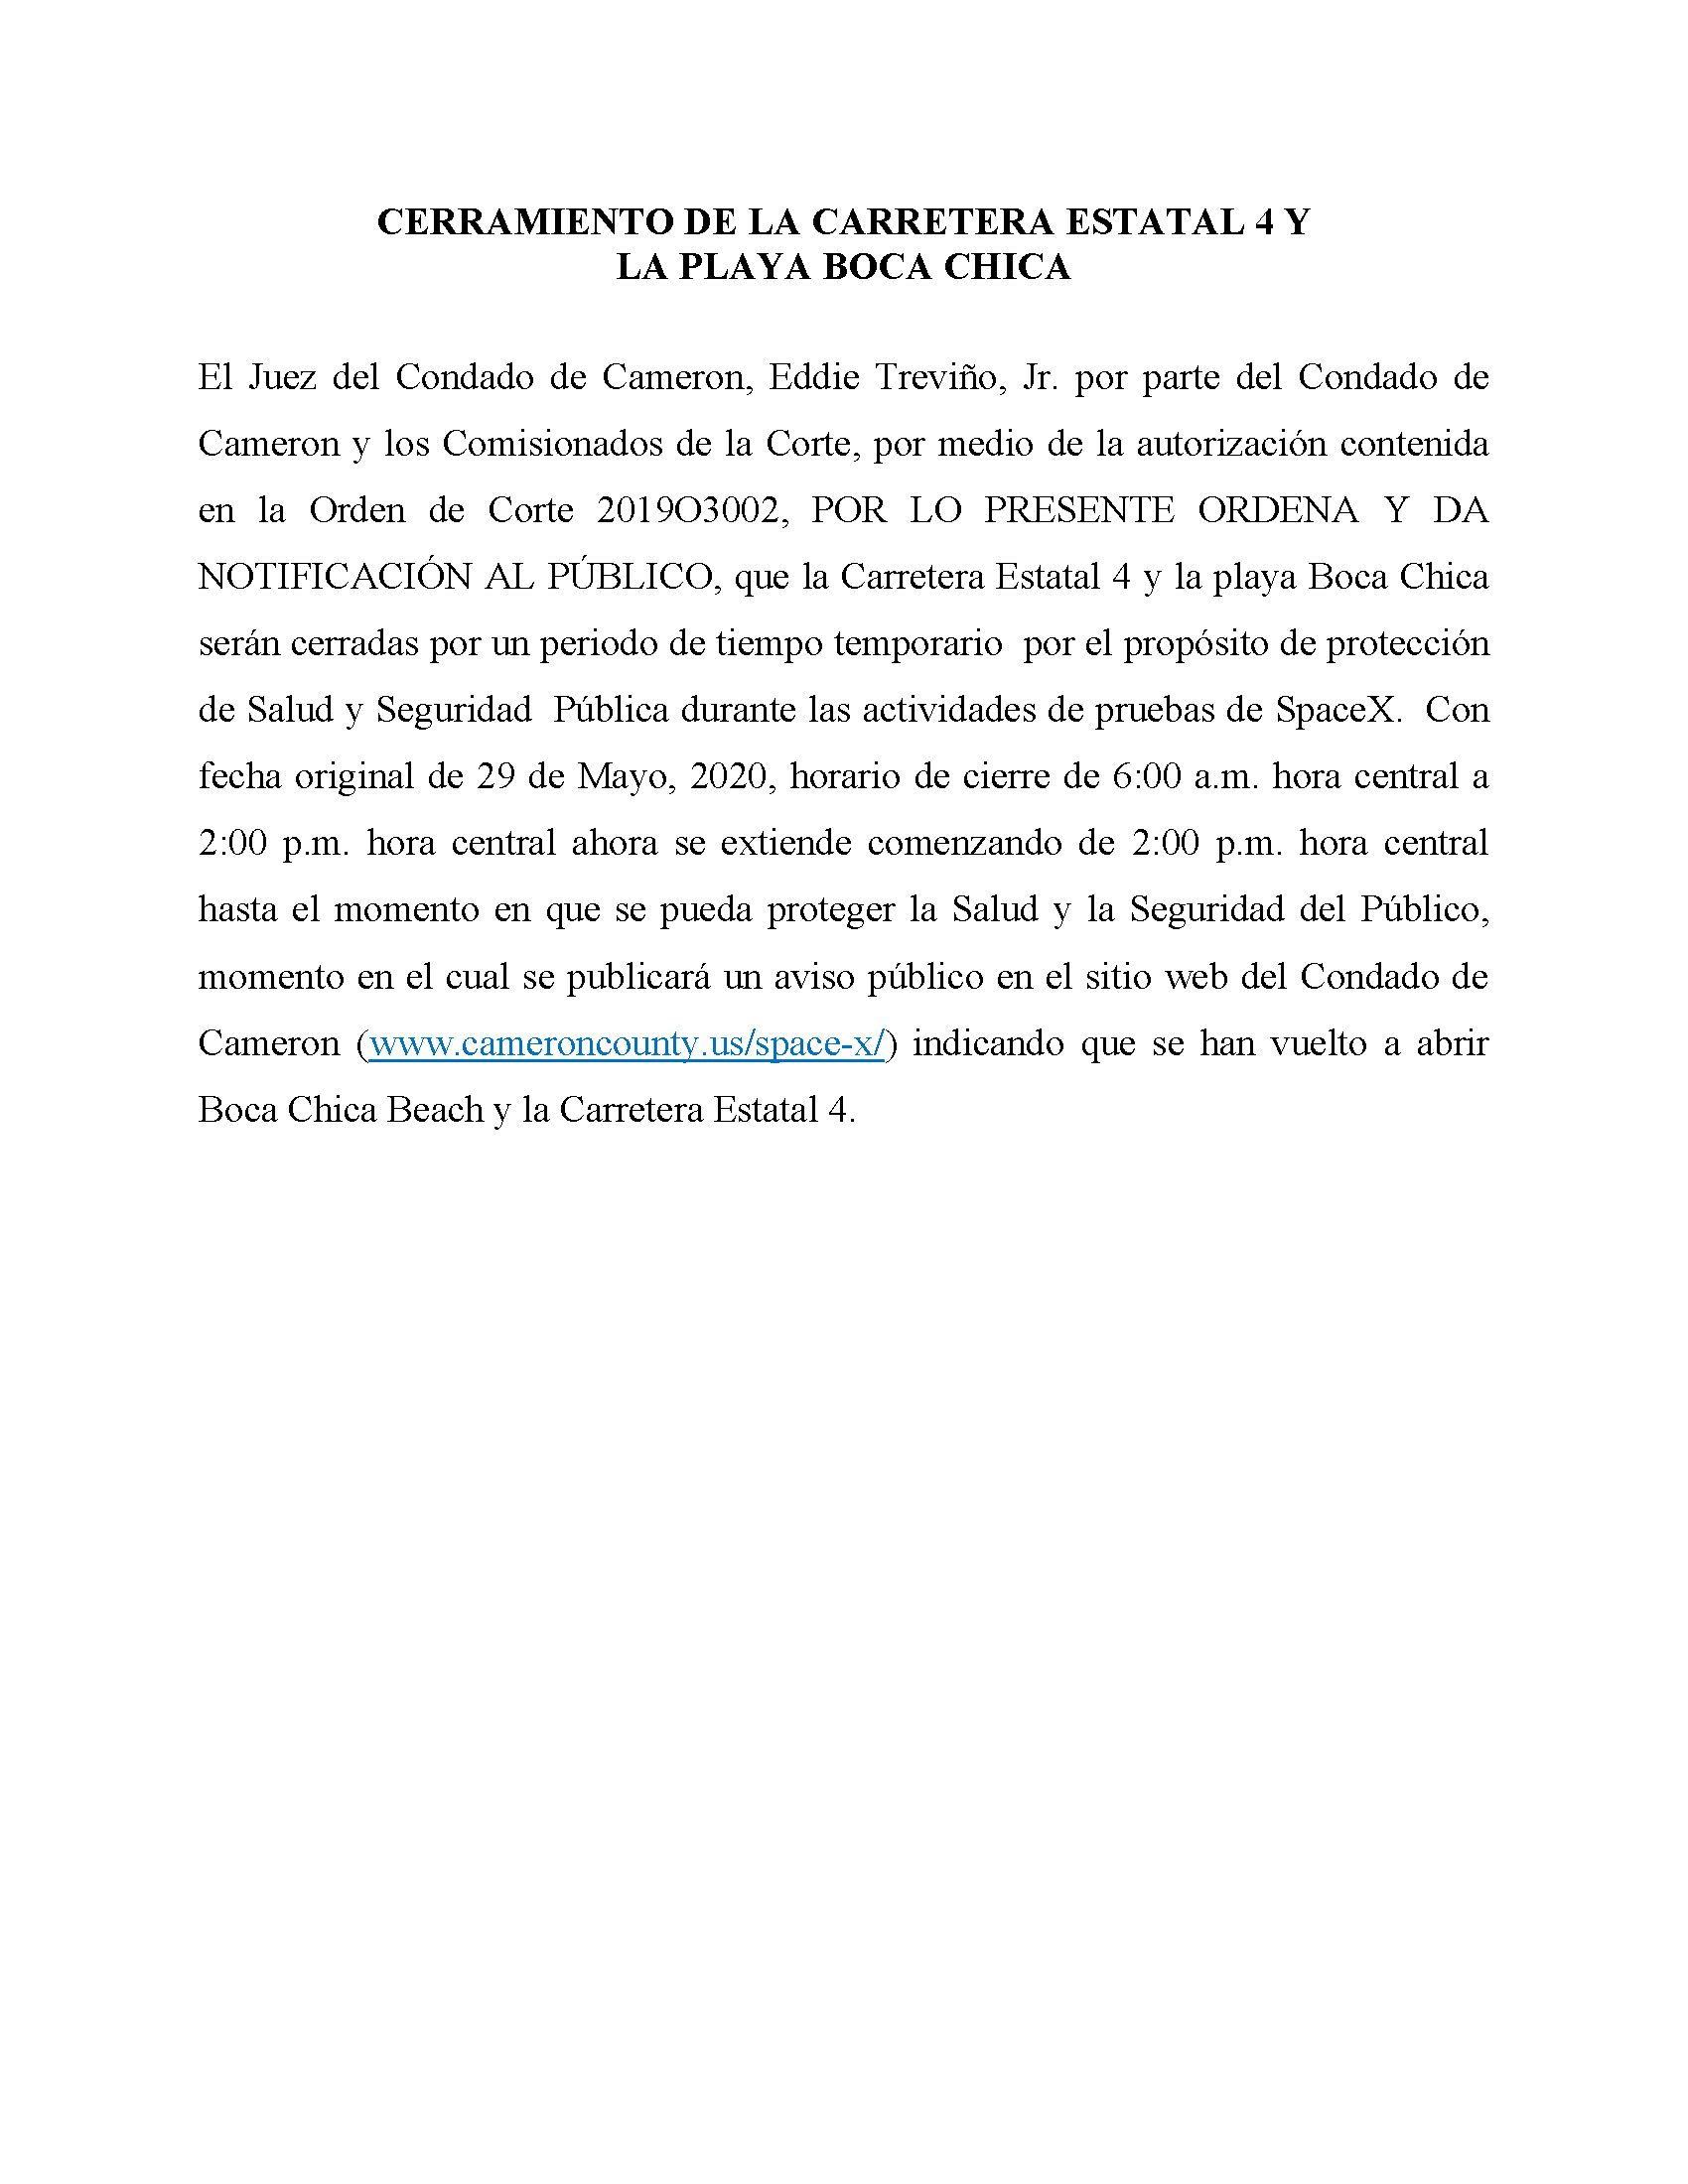 ORDER.CLOSURE OF HIGHWAY 4 Y LA PLAYA BOCA CHICA.SPANISH.05.29.20